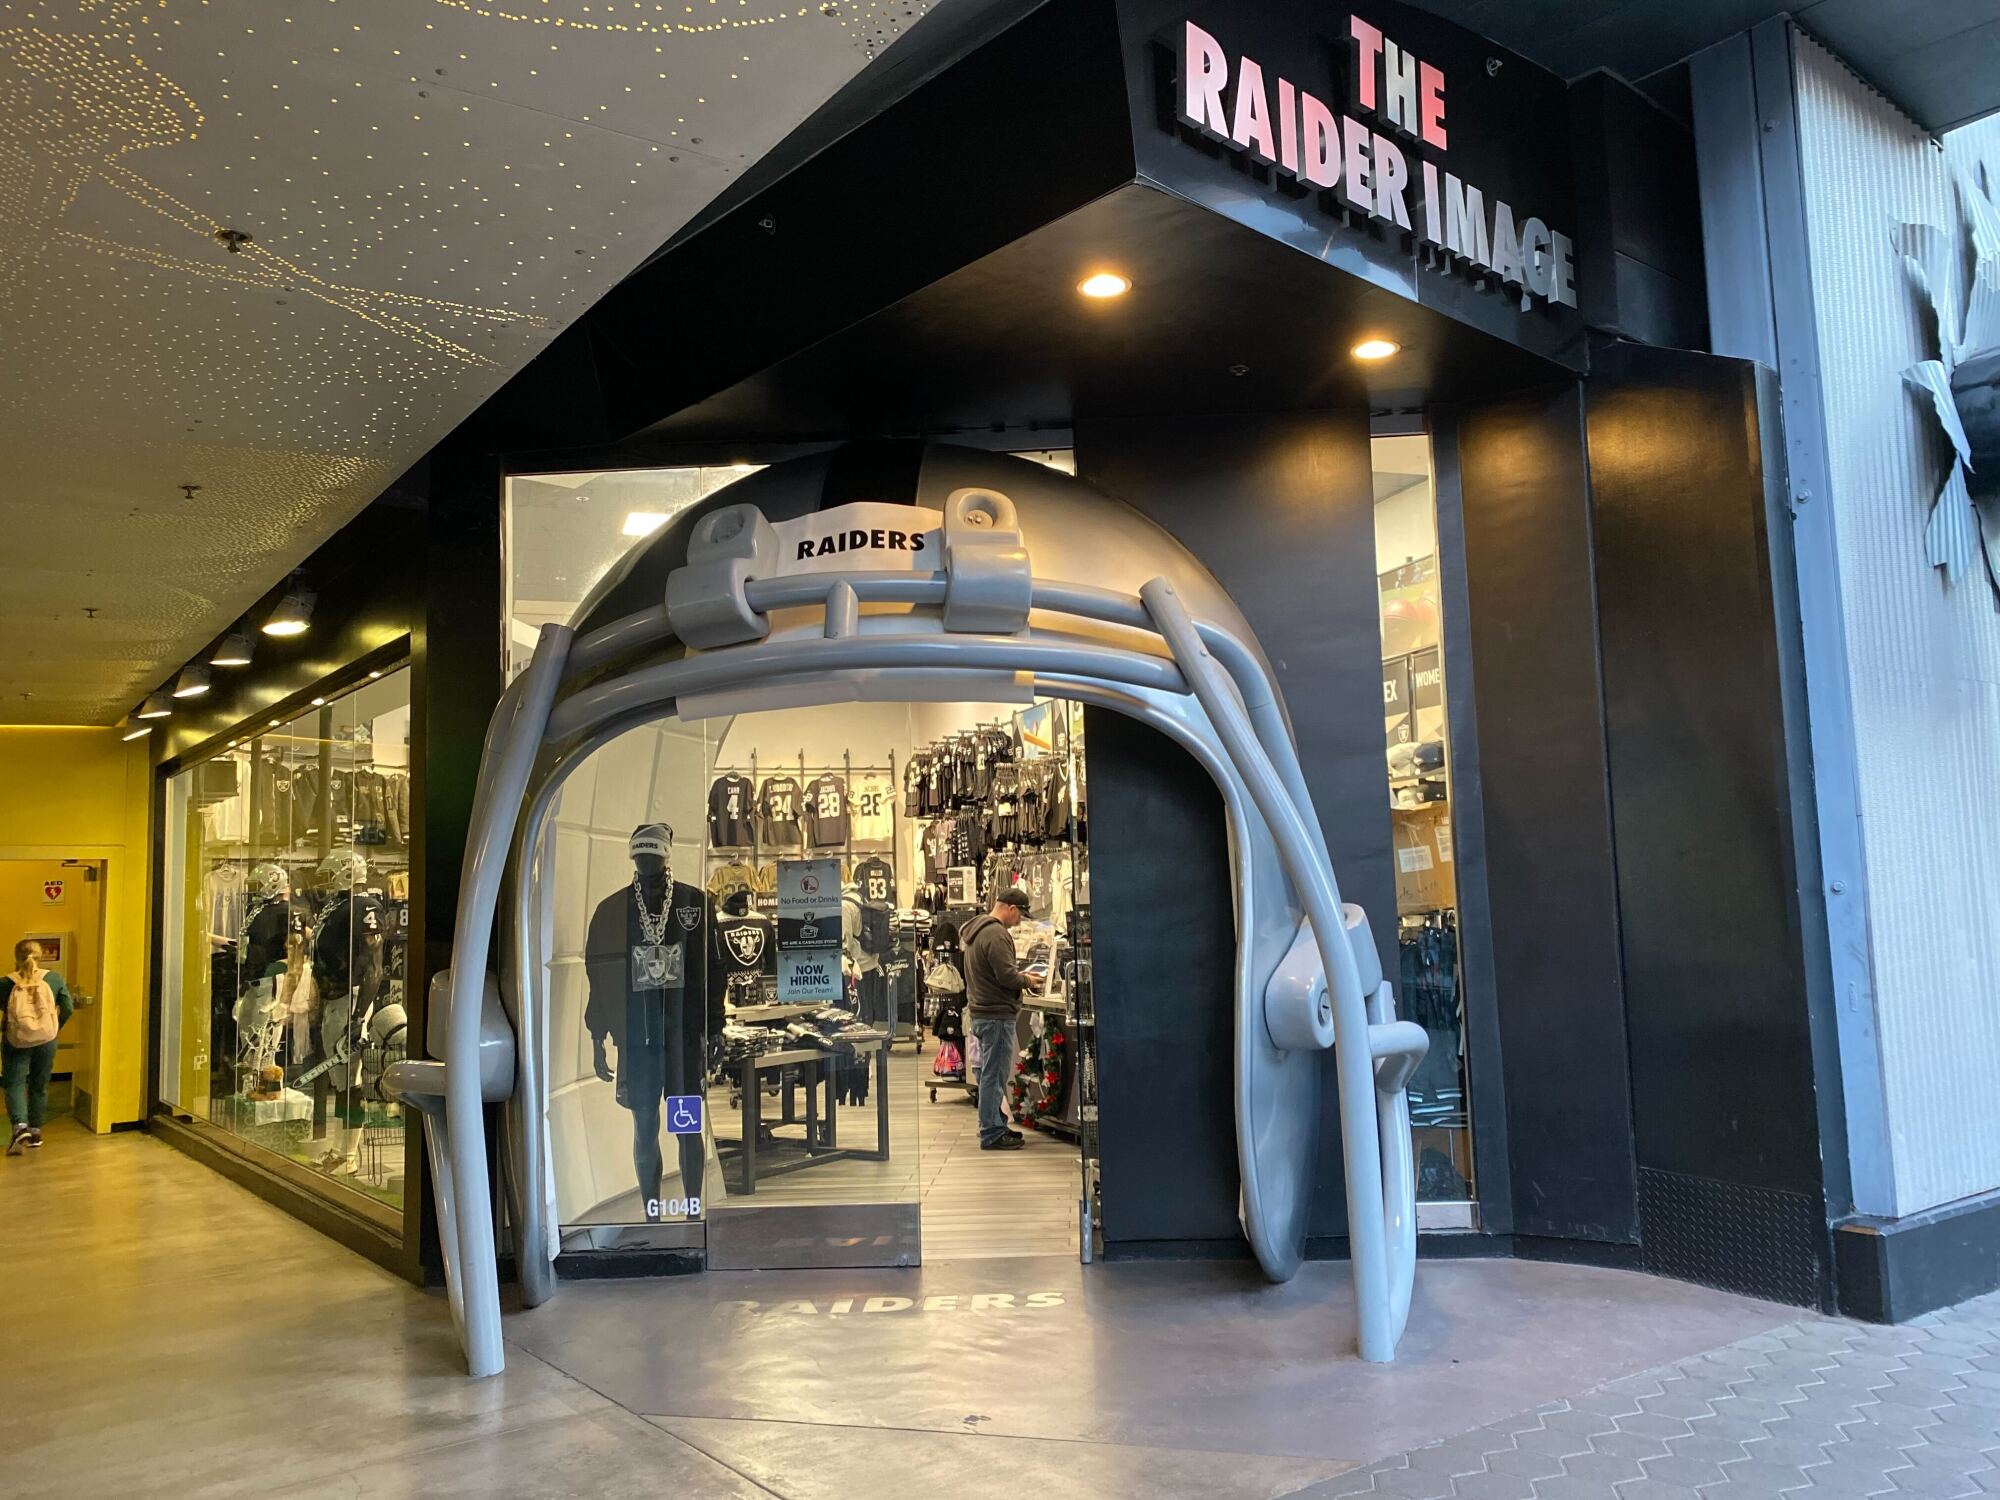 The Raider Image store at Universal CityWalk 